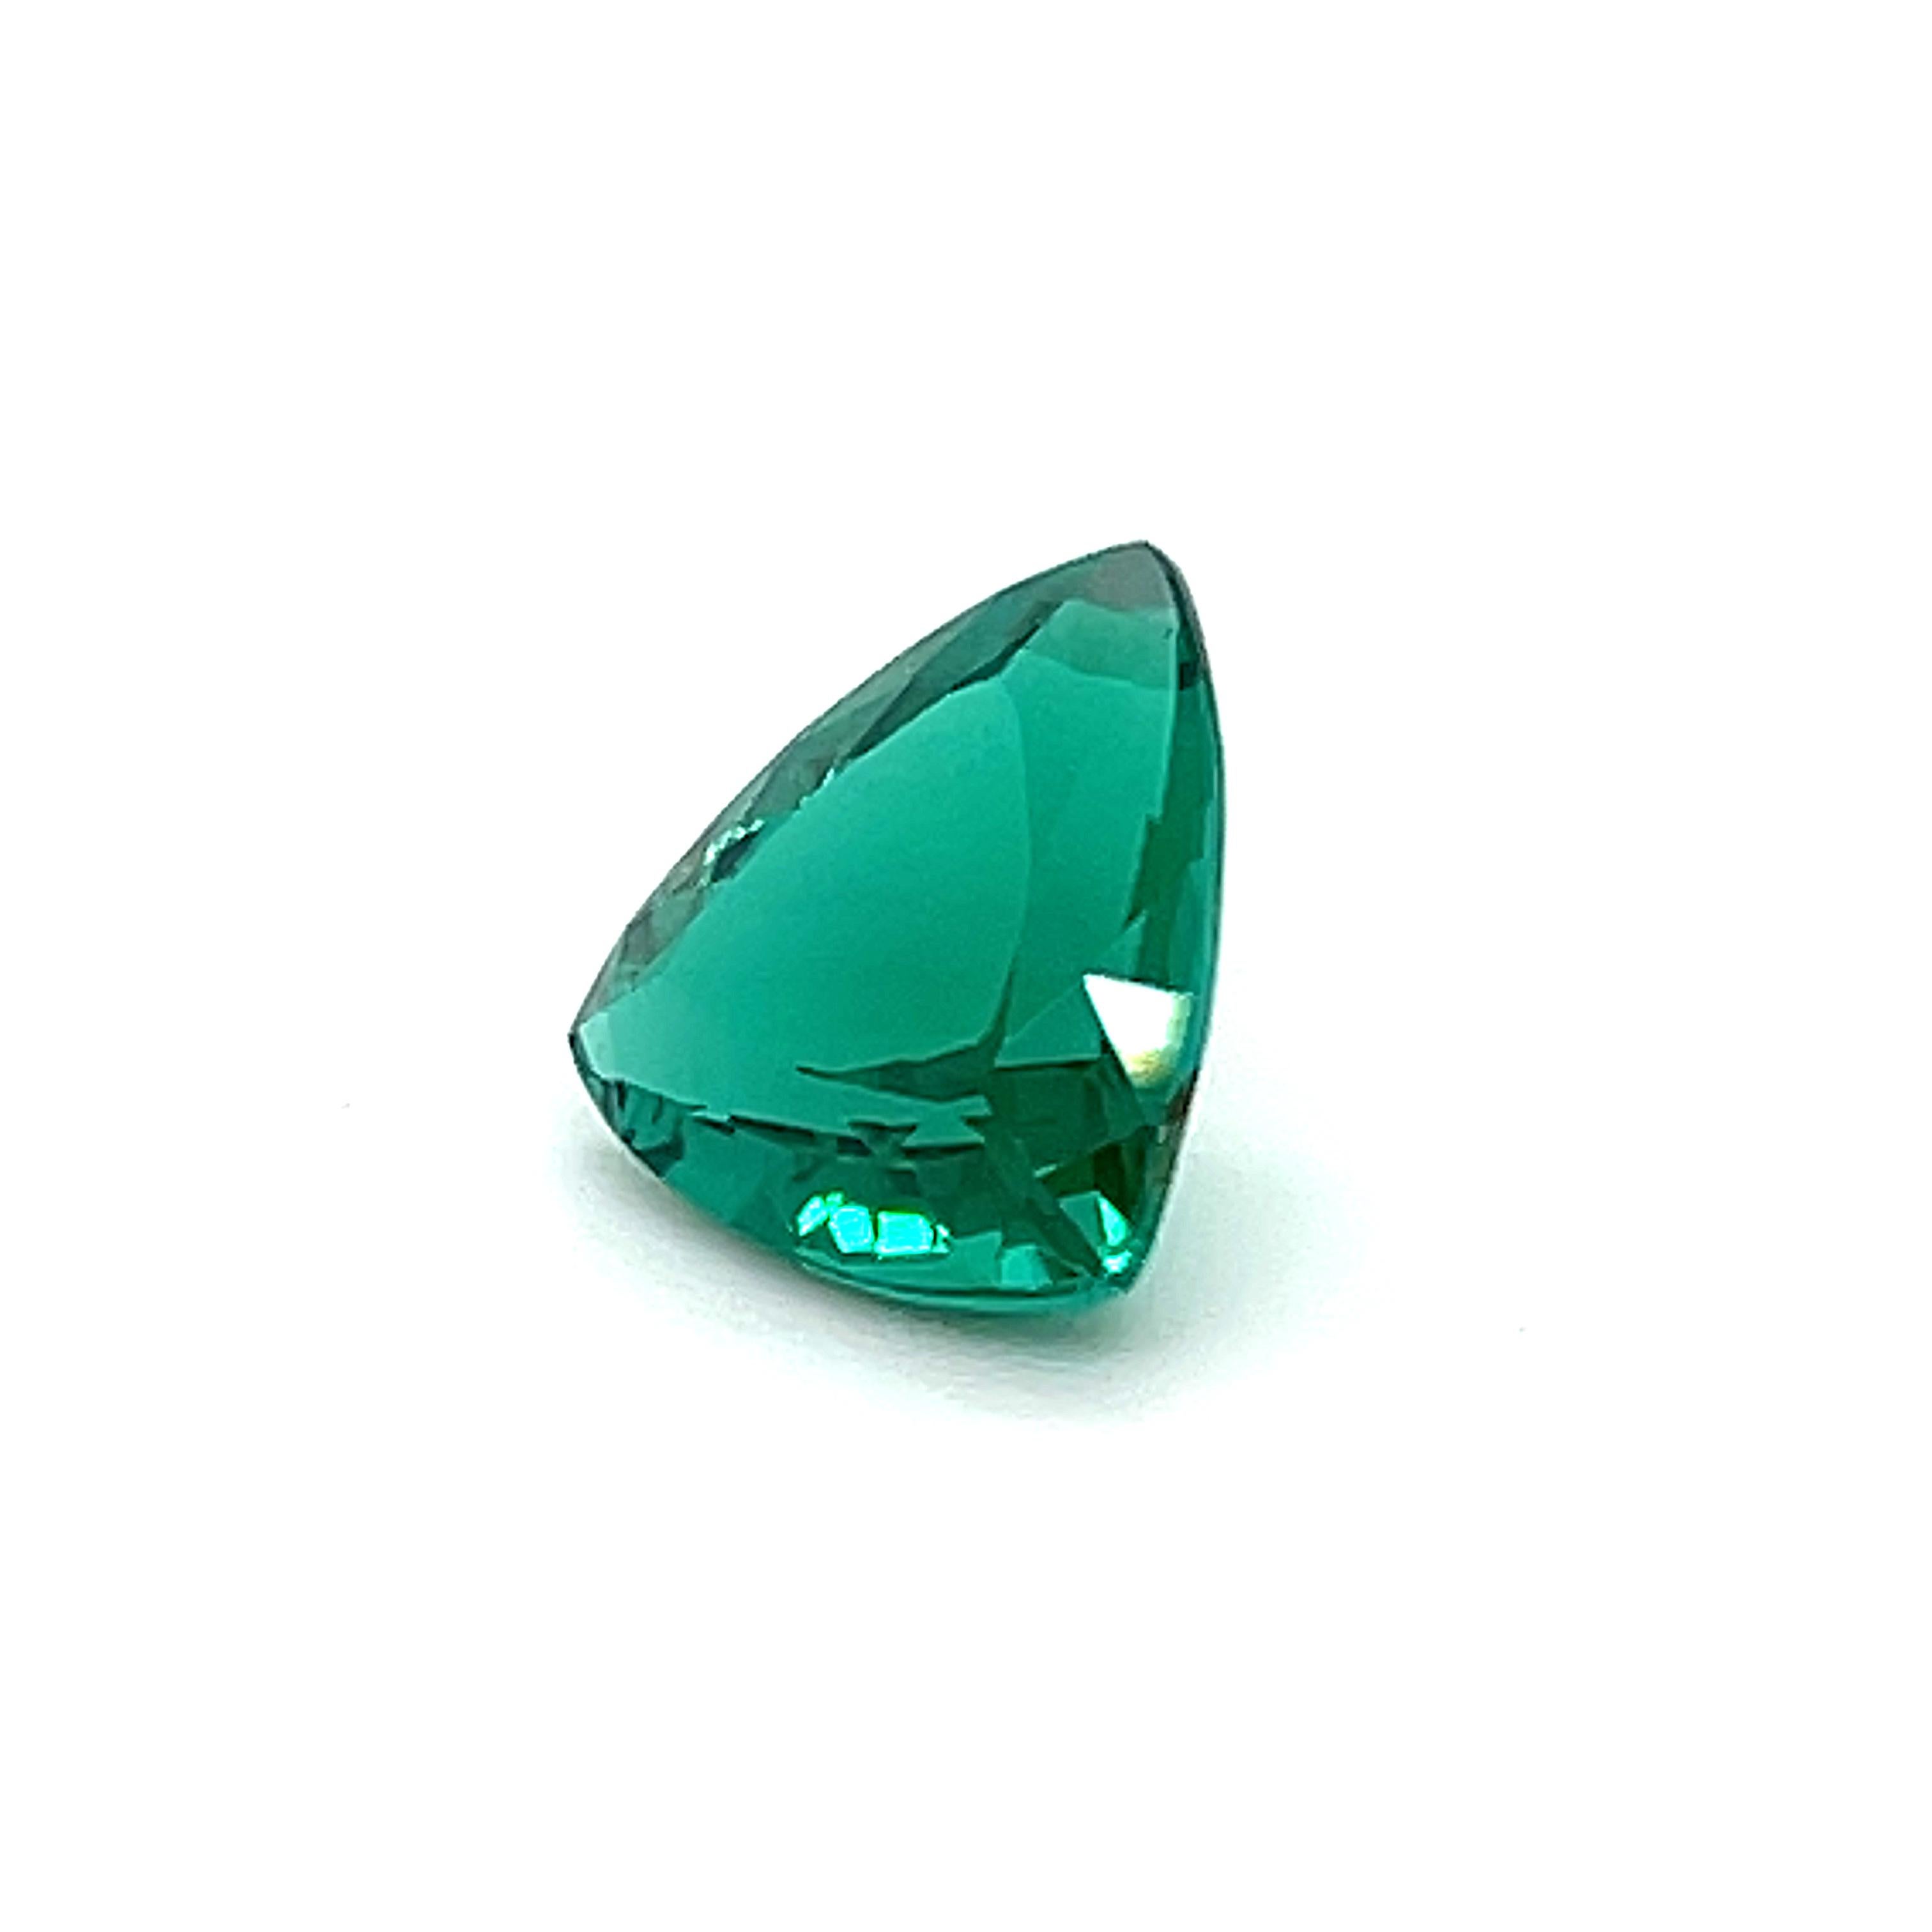 Contemporary 3.06ct Chrome Tourmaline Trillion Cut Loose Gemstone For Sale